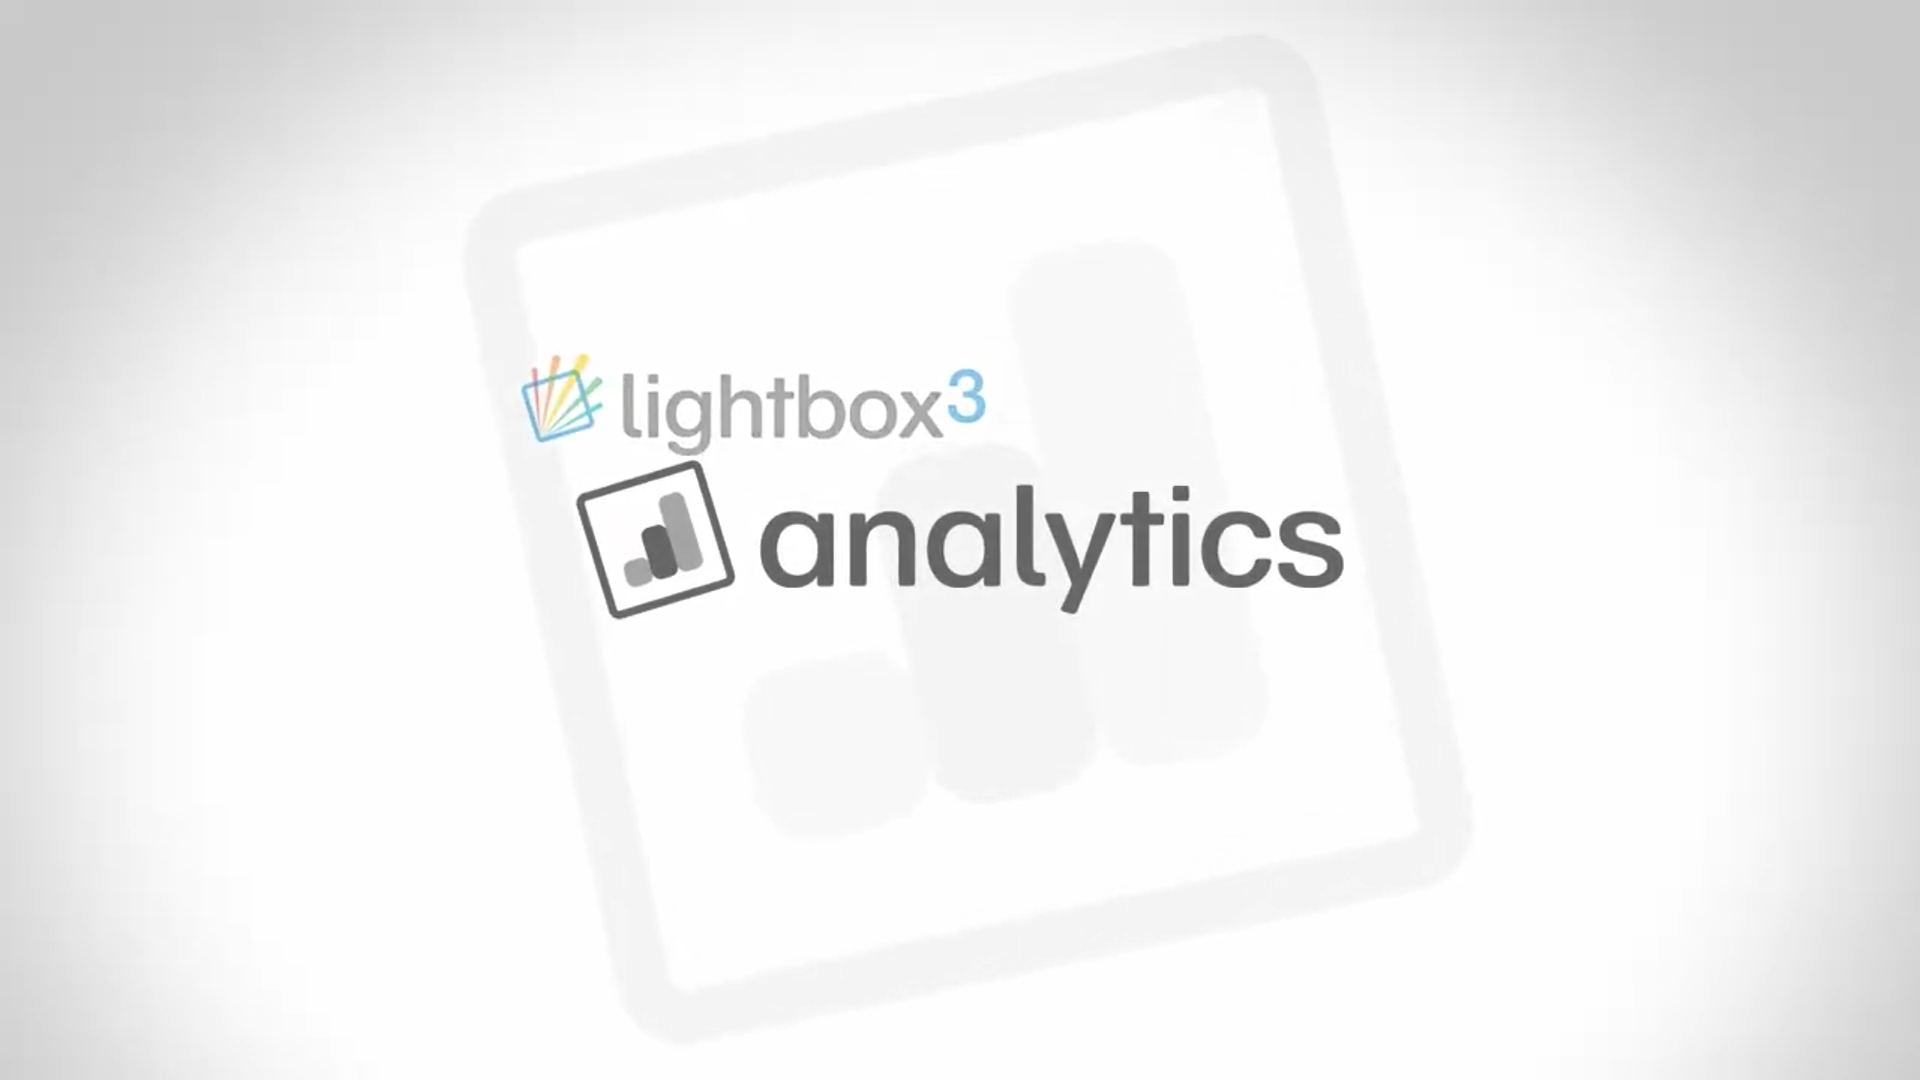 Lightbox 3 Analytics